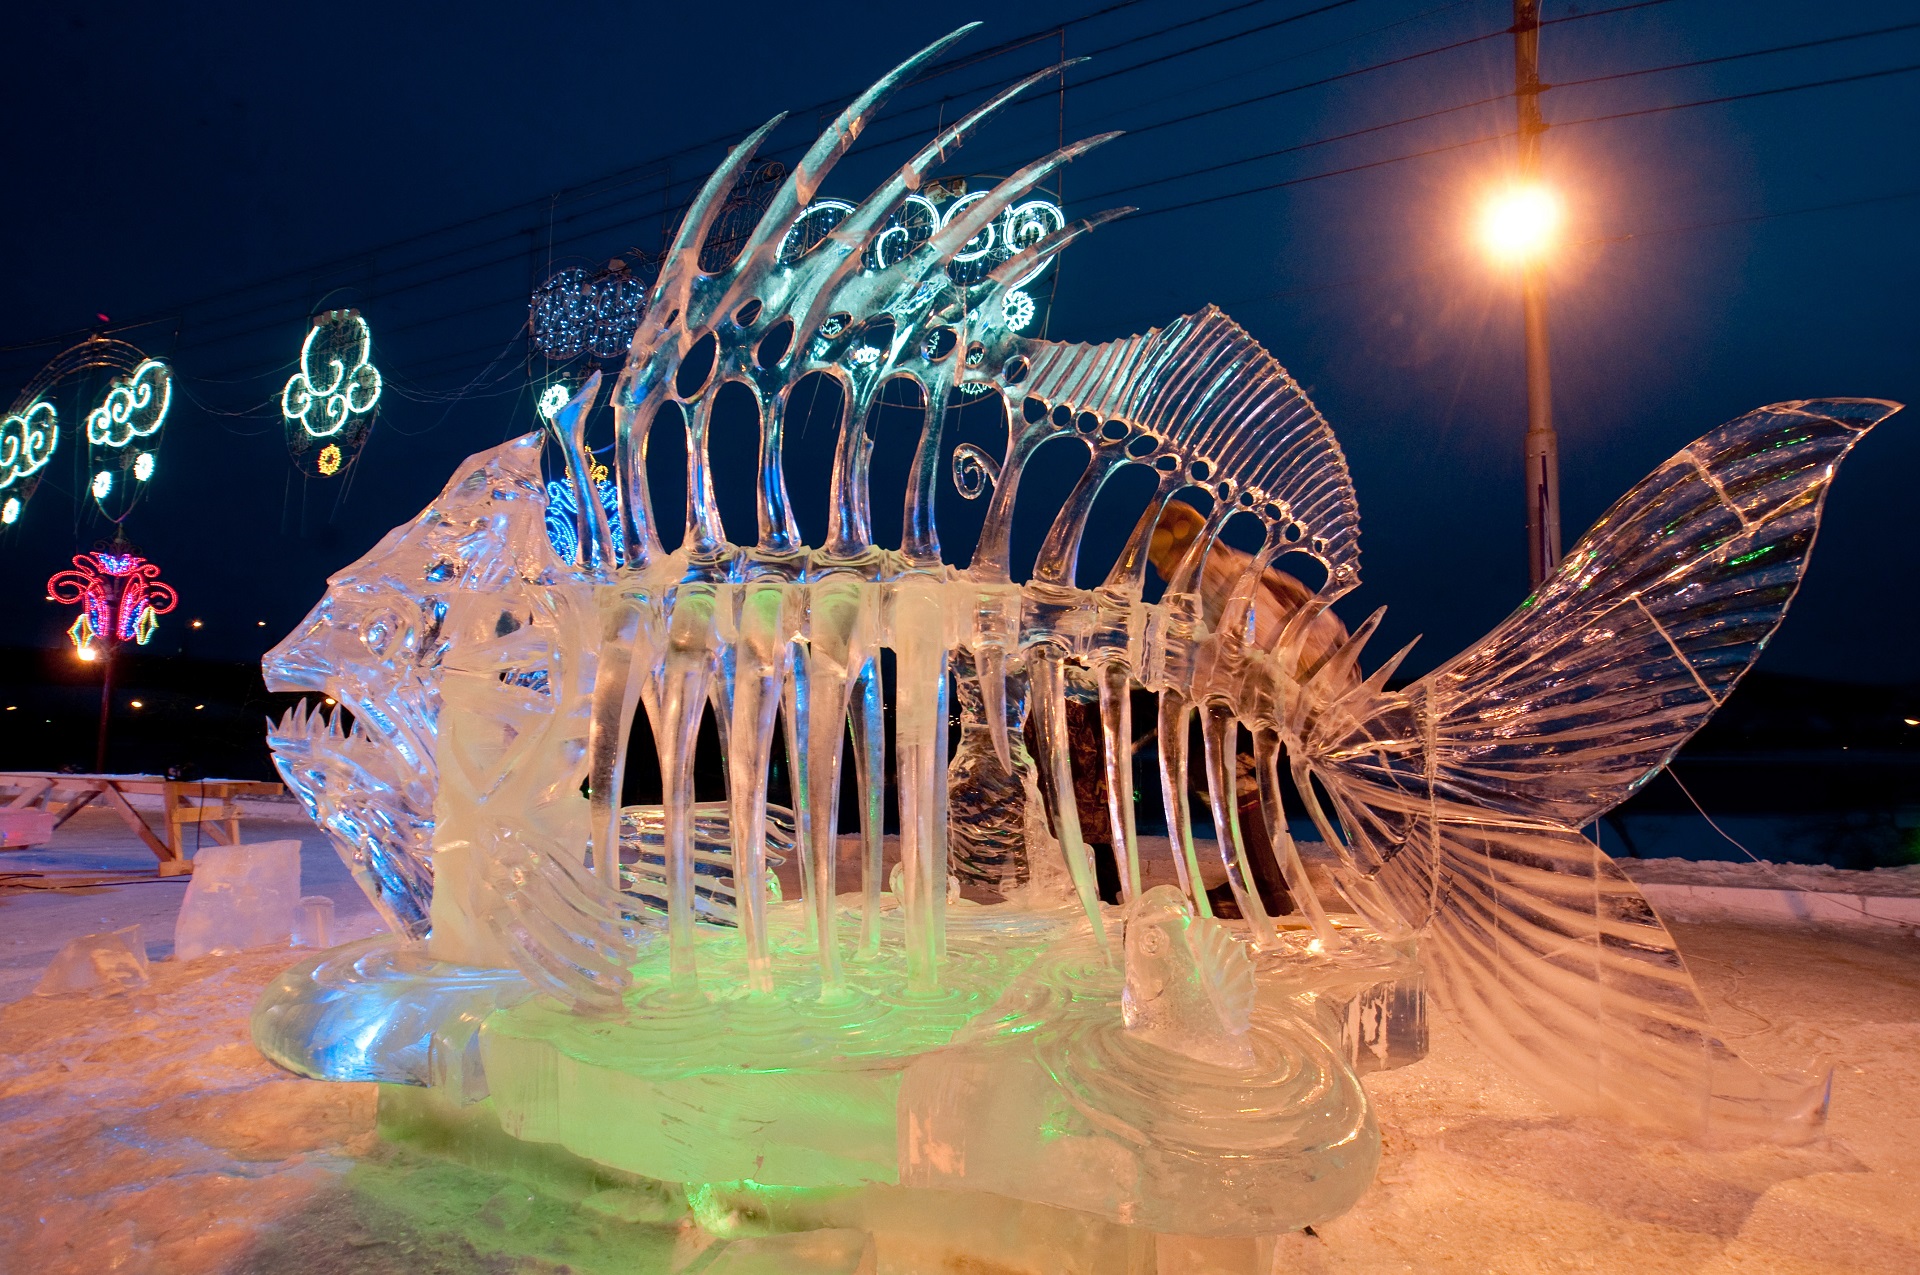 Ледяные фигуры. Фестиваль ледяных скульптур Красноярск. Скульптуры из льда. Необычные ледяные скульптуры. Скульптуры изо льда в Москве.